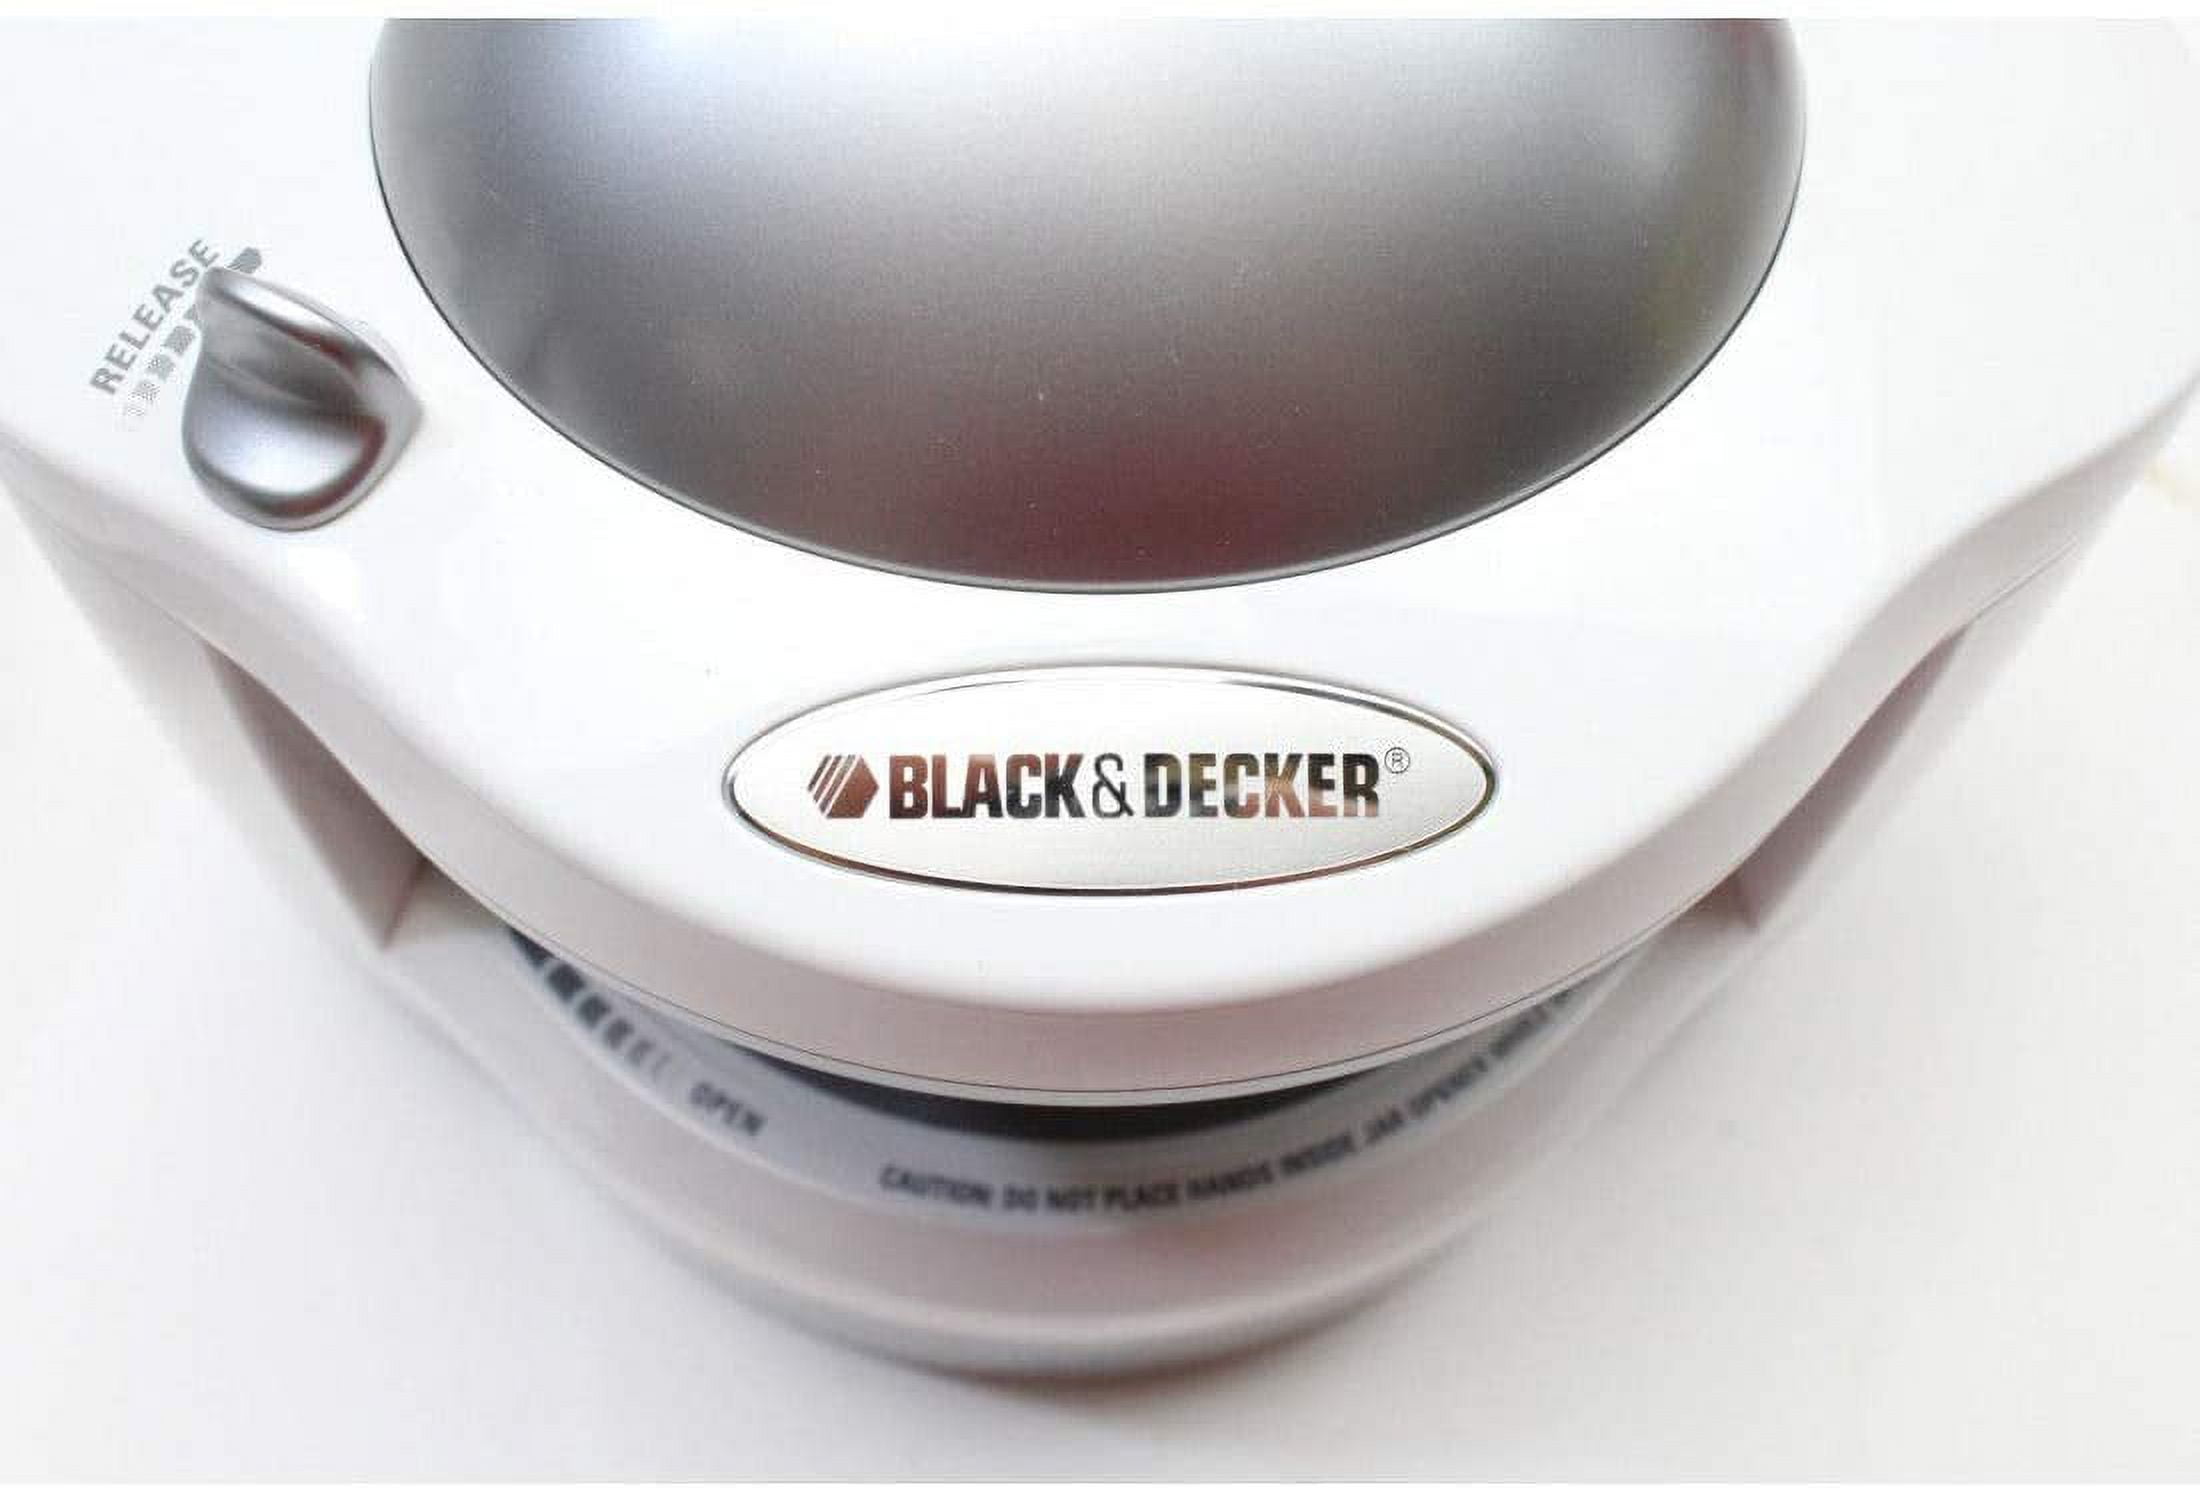  Black & Decker Lids Off Jar Opener : Home & Kitchen